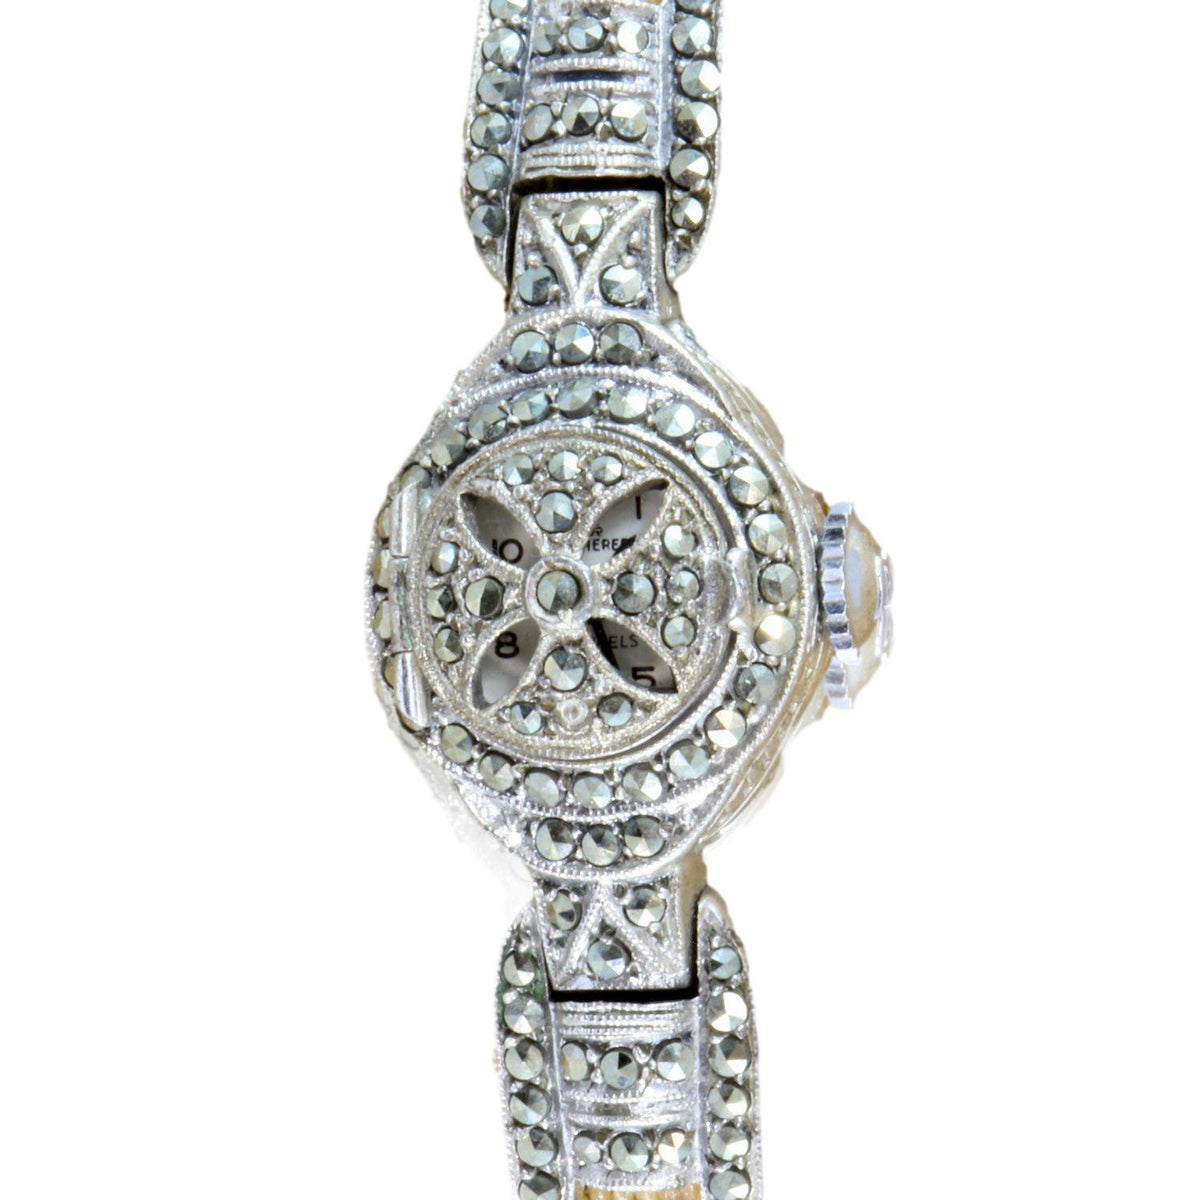 Swiss Peak-A-Boo 17 Jewel 1950s Marcasite Cuff Wristwatch